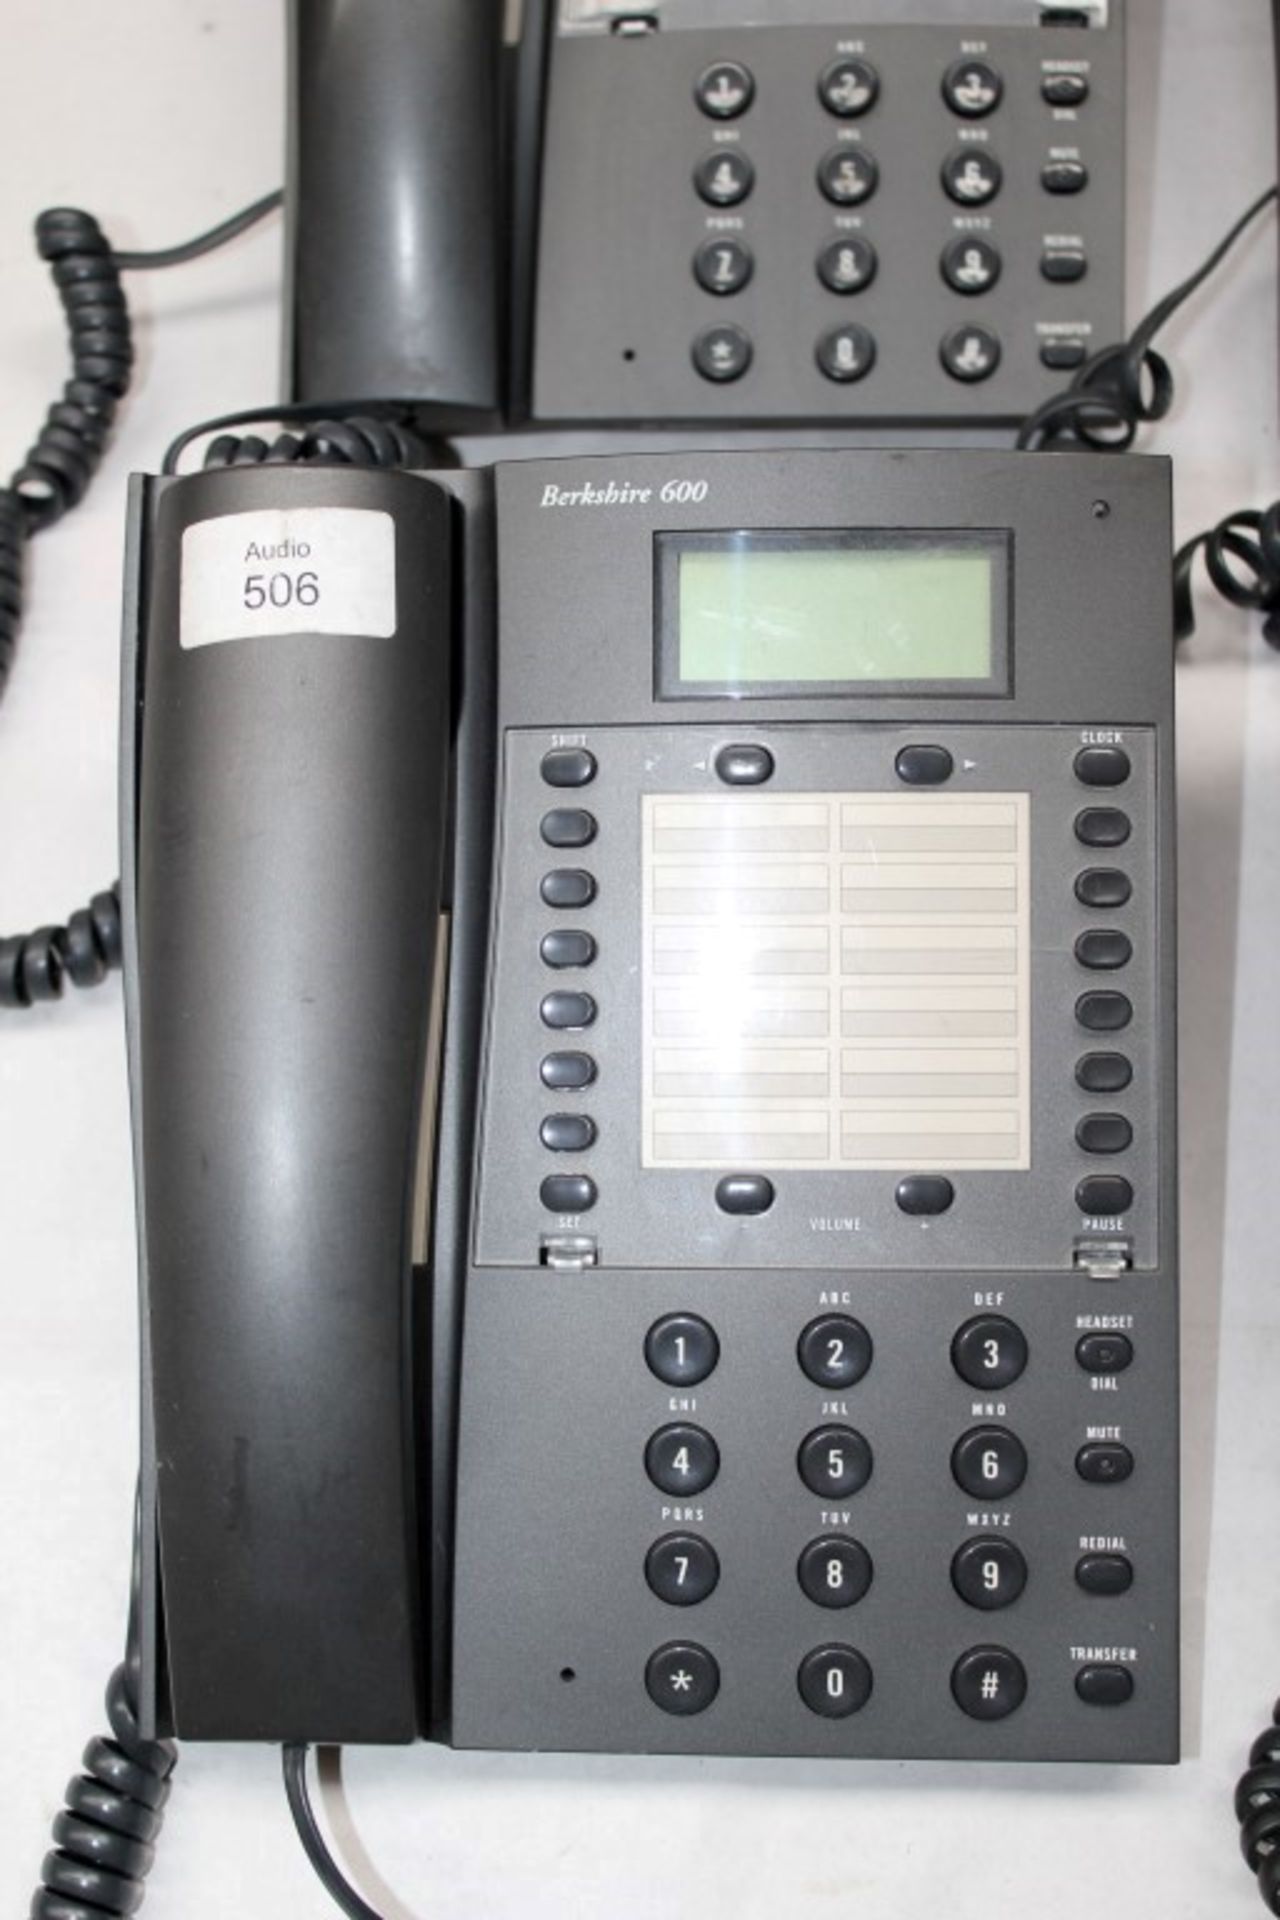 4 x ATL Professional Office Telephones - Model: Berkshire 600 - Pre-owned In Working Order - Taken - Image 3 of 4